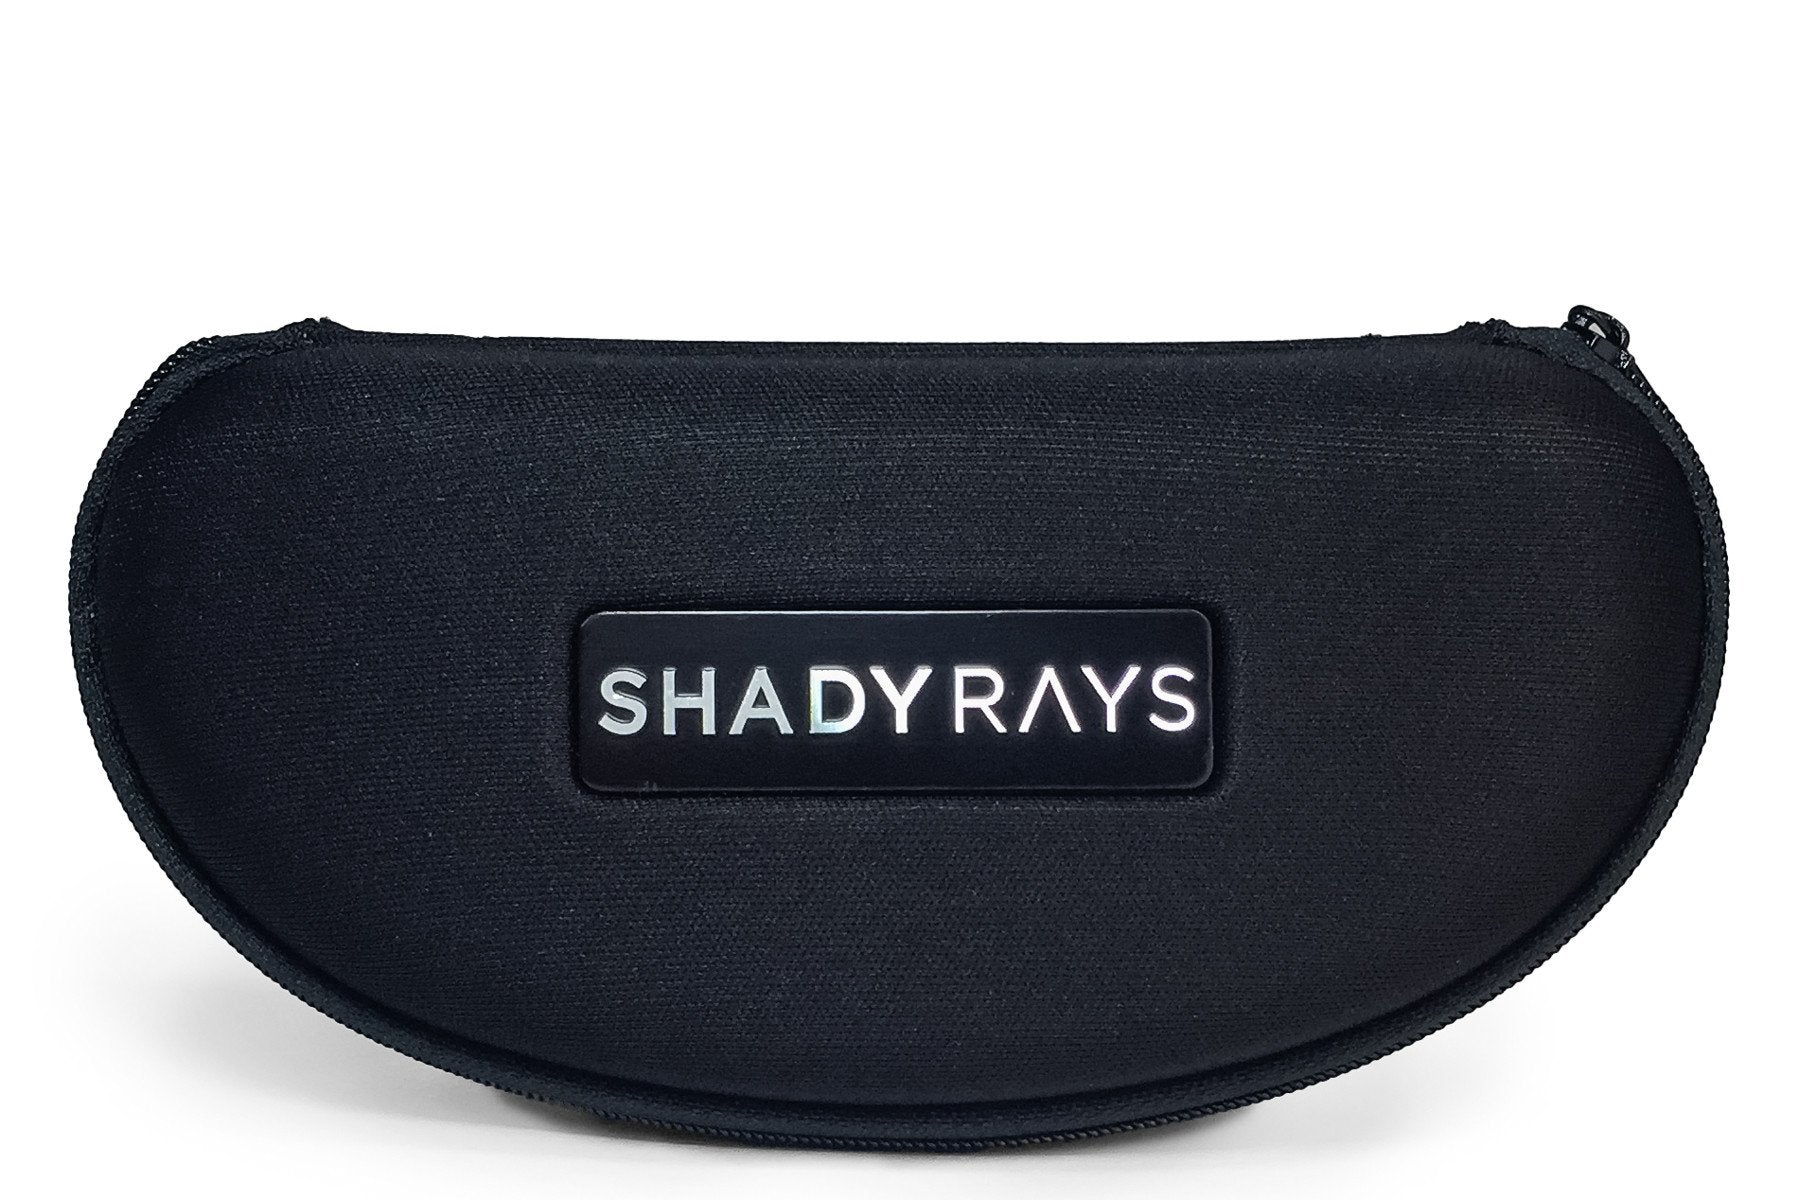 Shady Rays on X: HighRise with a view #ShadyRays #LiveHard